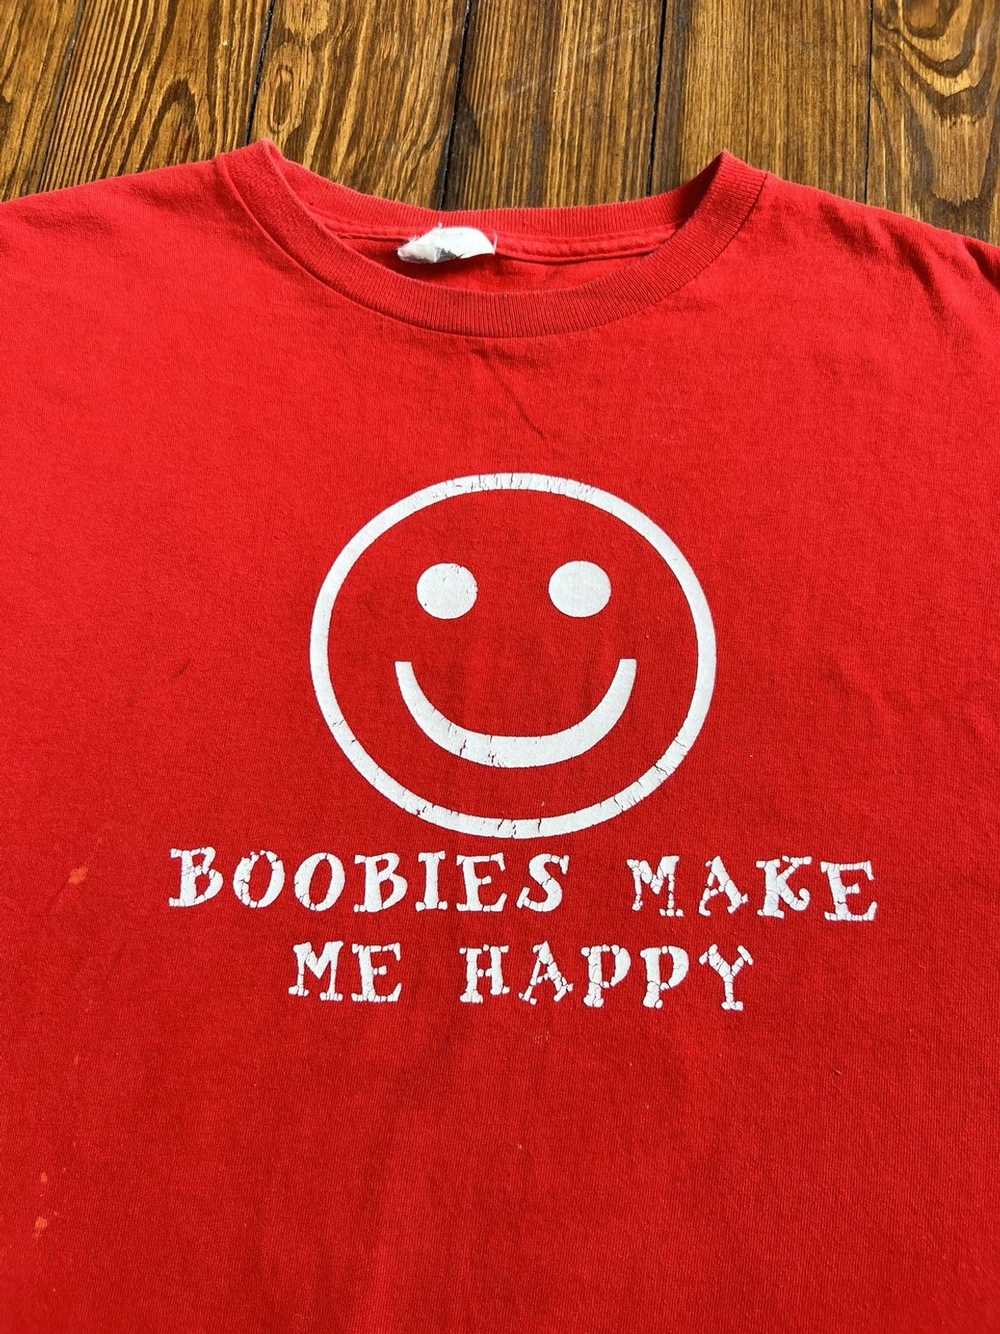 Vintage Vintage Boobies Make Me Happy Smiley Shirt - image 2